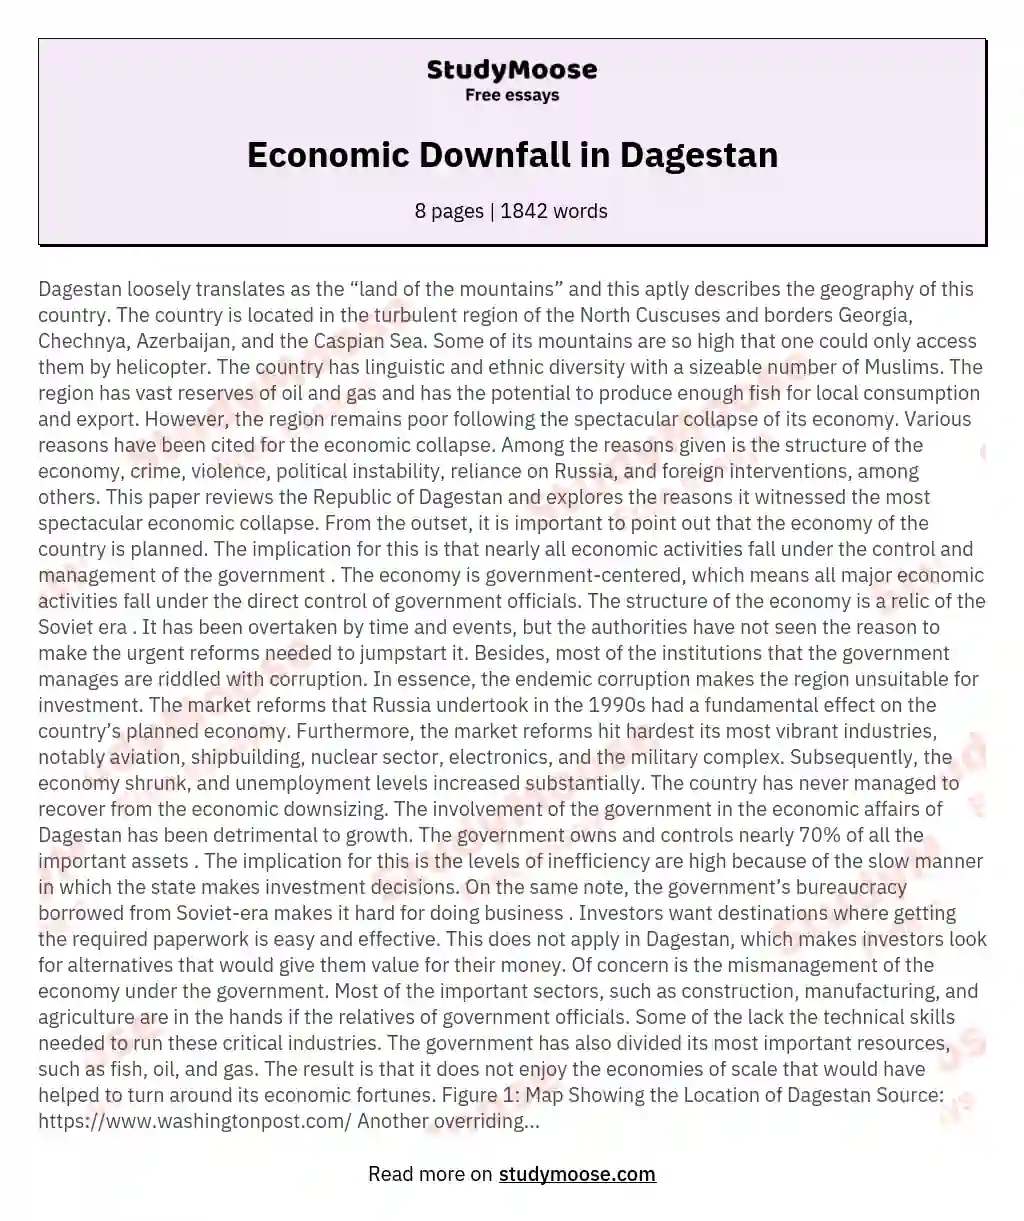 Economic Downfall in Dagestan essay